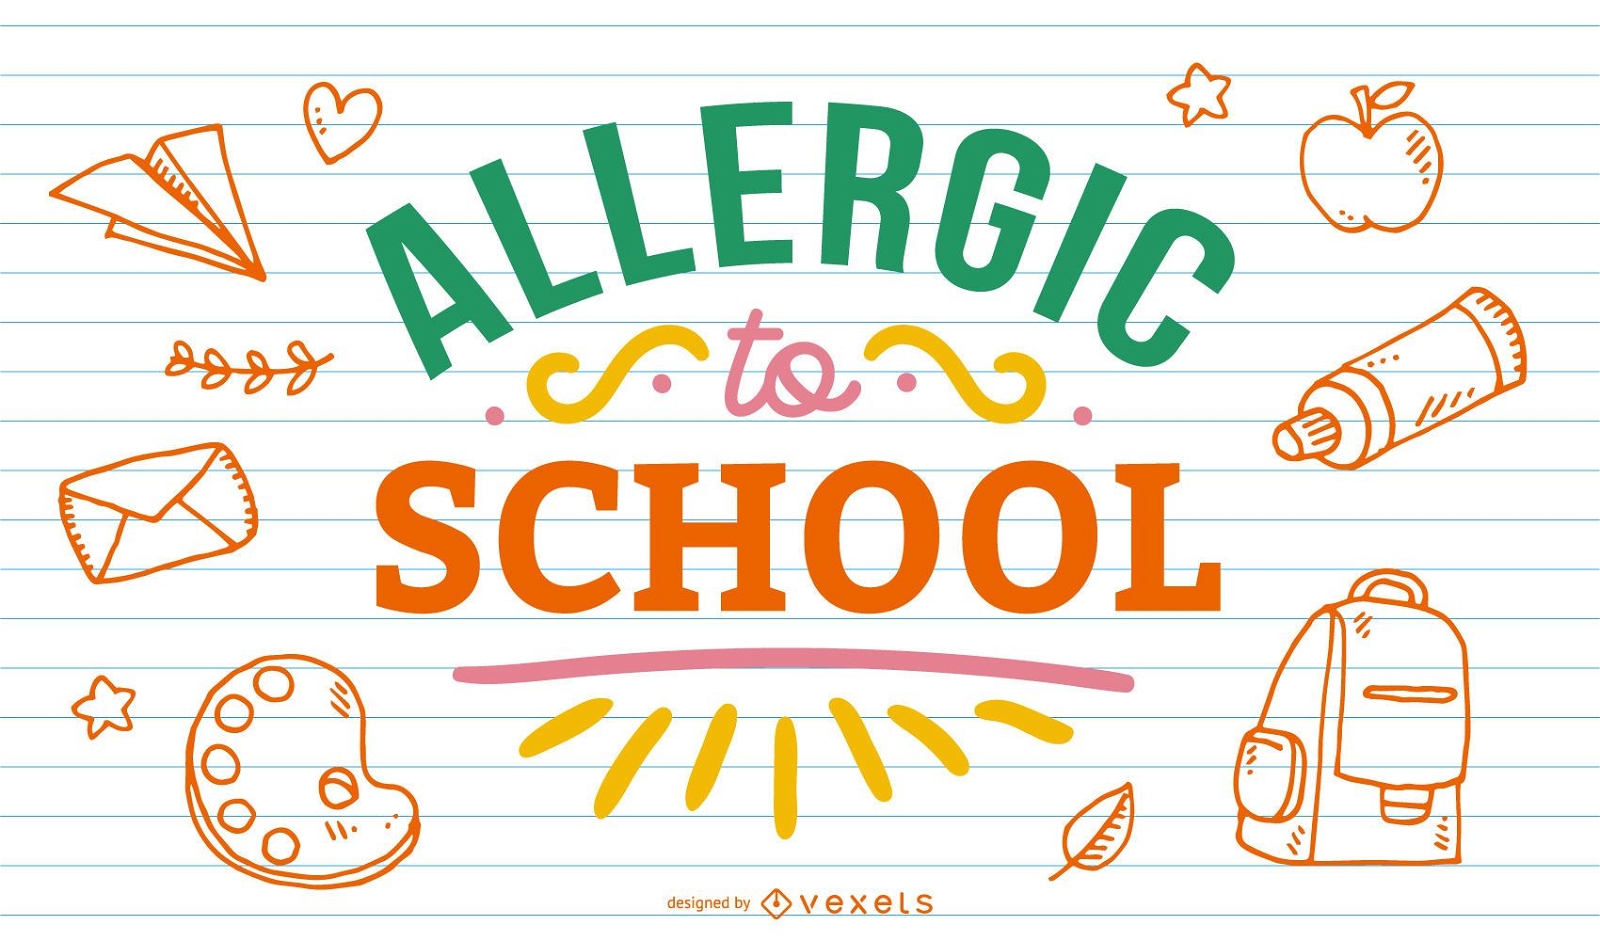 Allergic to school lettering design